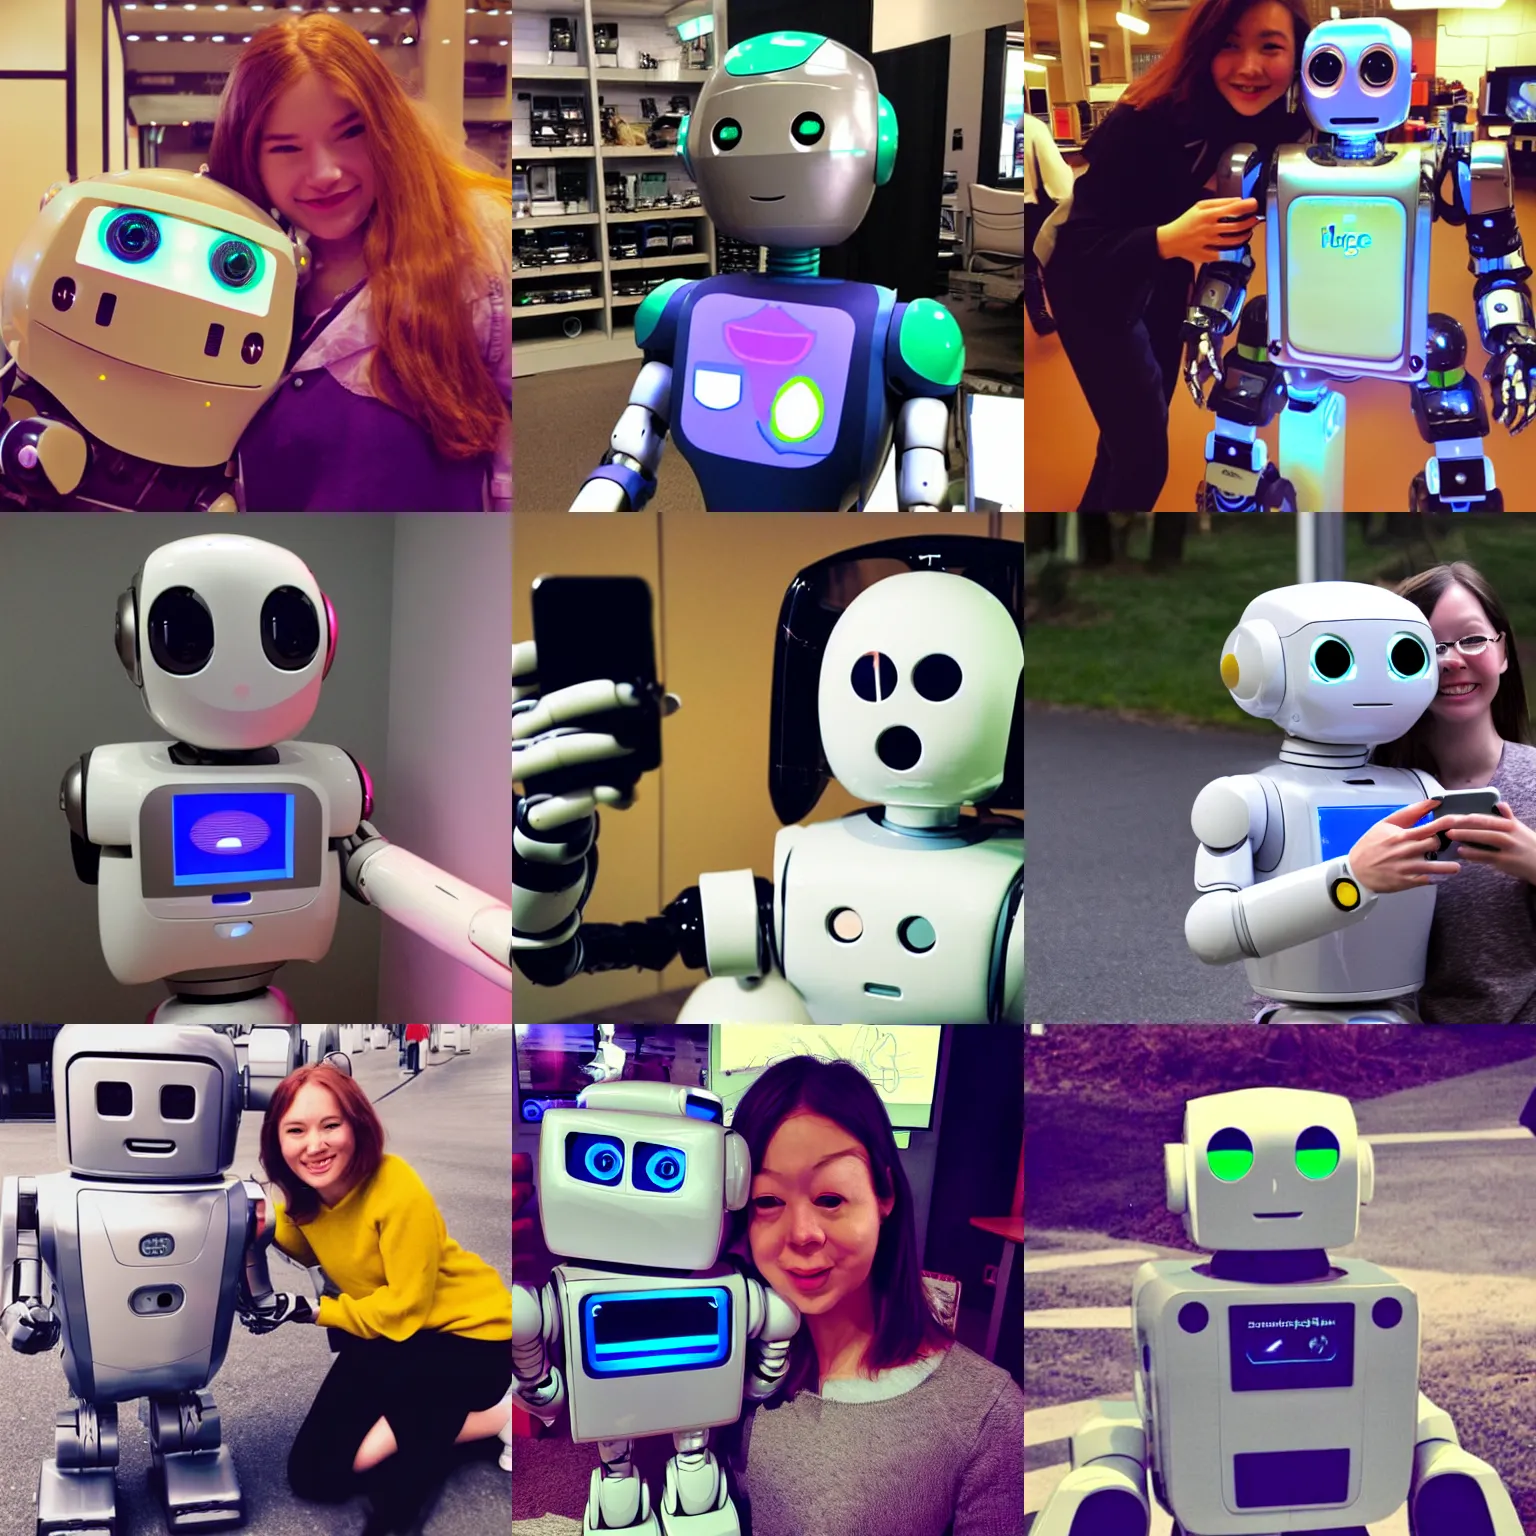 Prompt: <robot desire='hug' traits='superintelligent self-aware kind'>selfie with cute robot</robot>